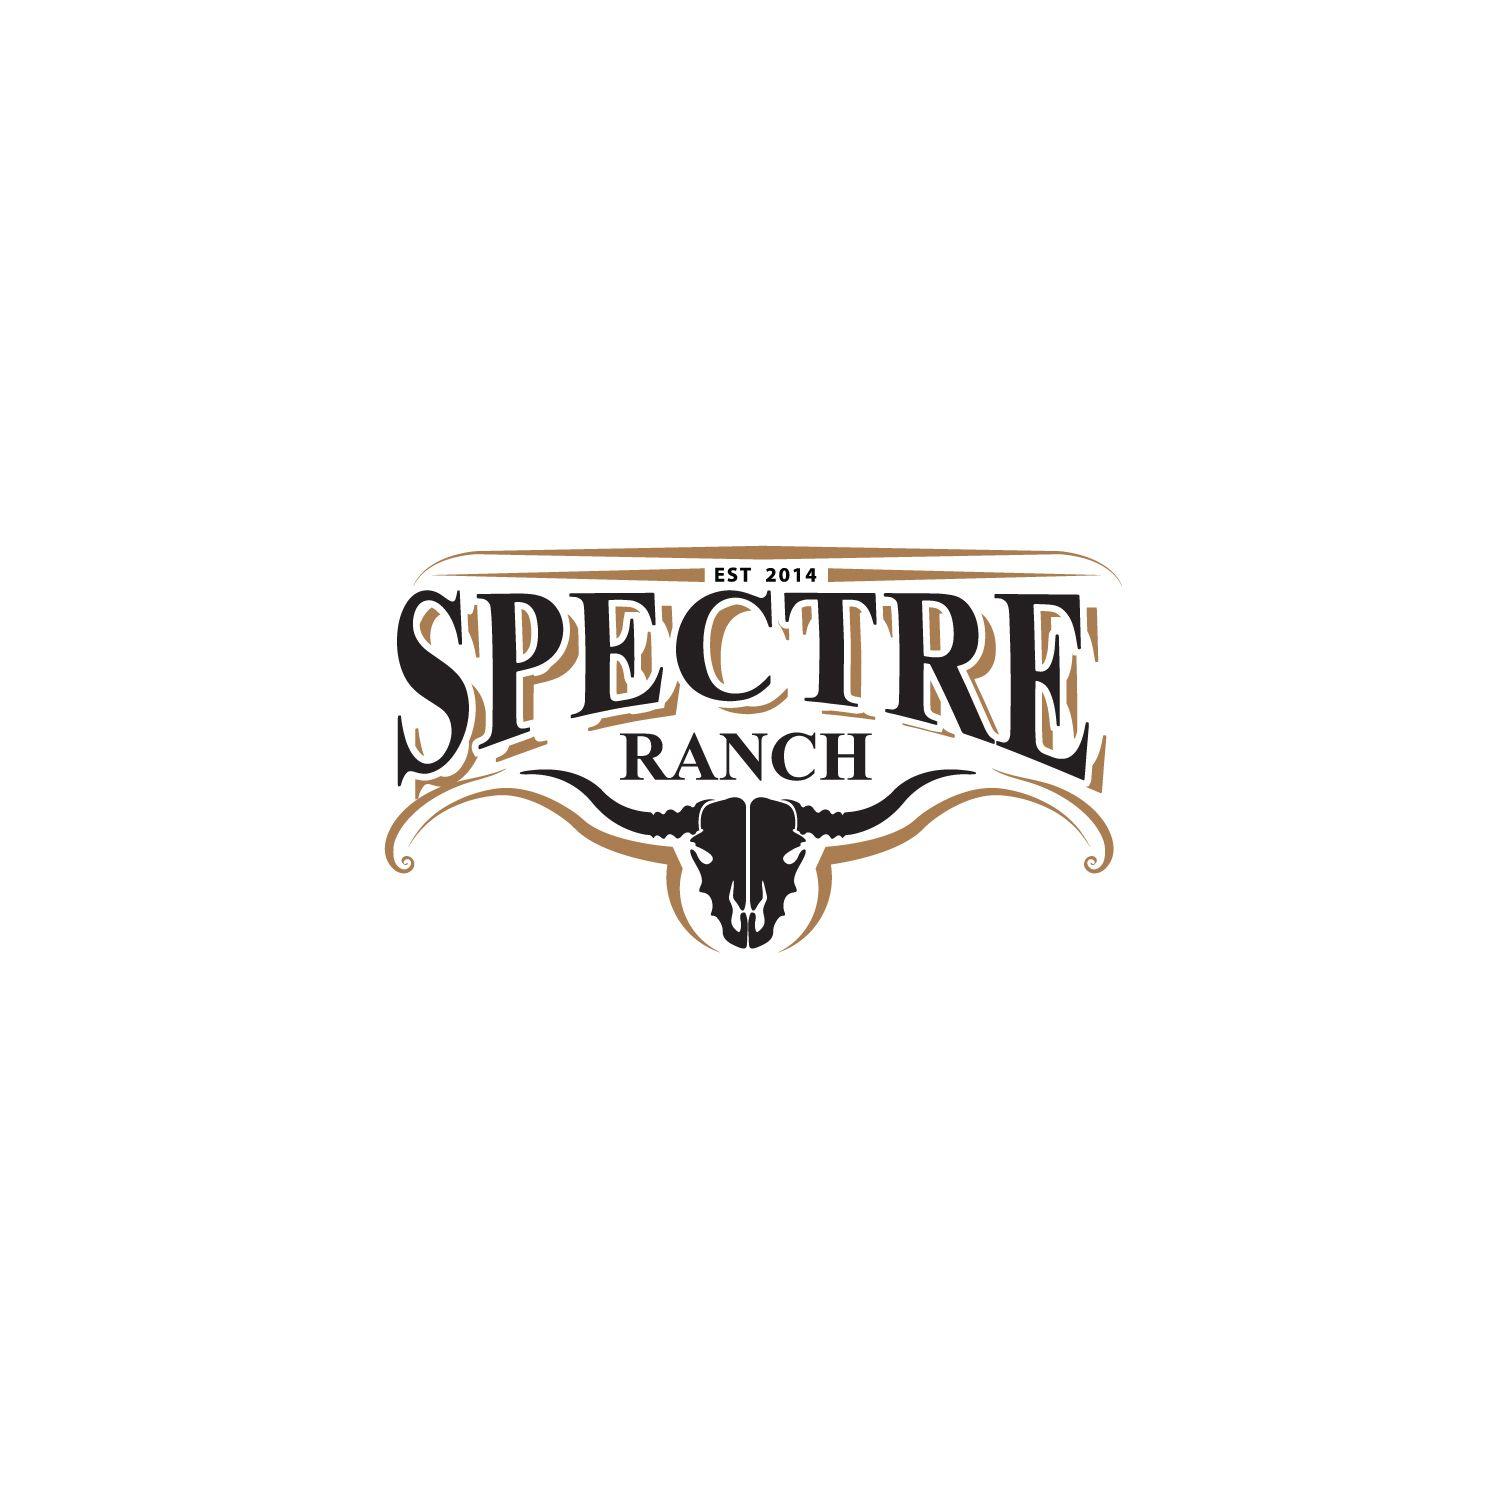 Ranch Logo - Elegant, Playful, Ranch Logo Design for Spectre Ranch by Khan01 ...